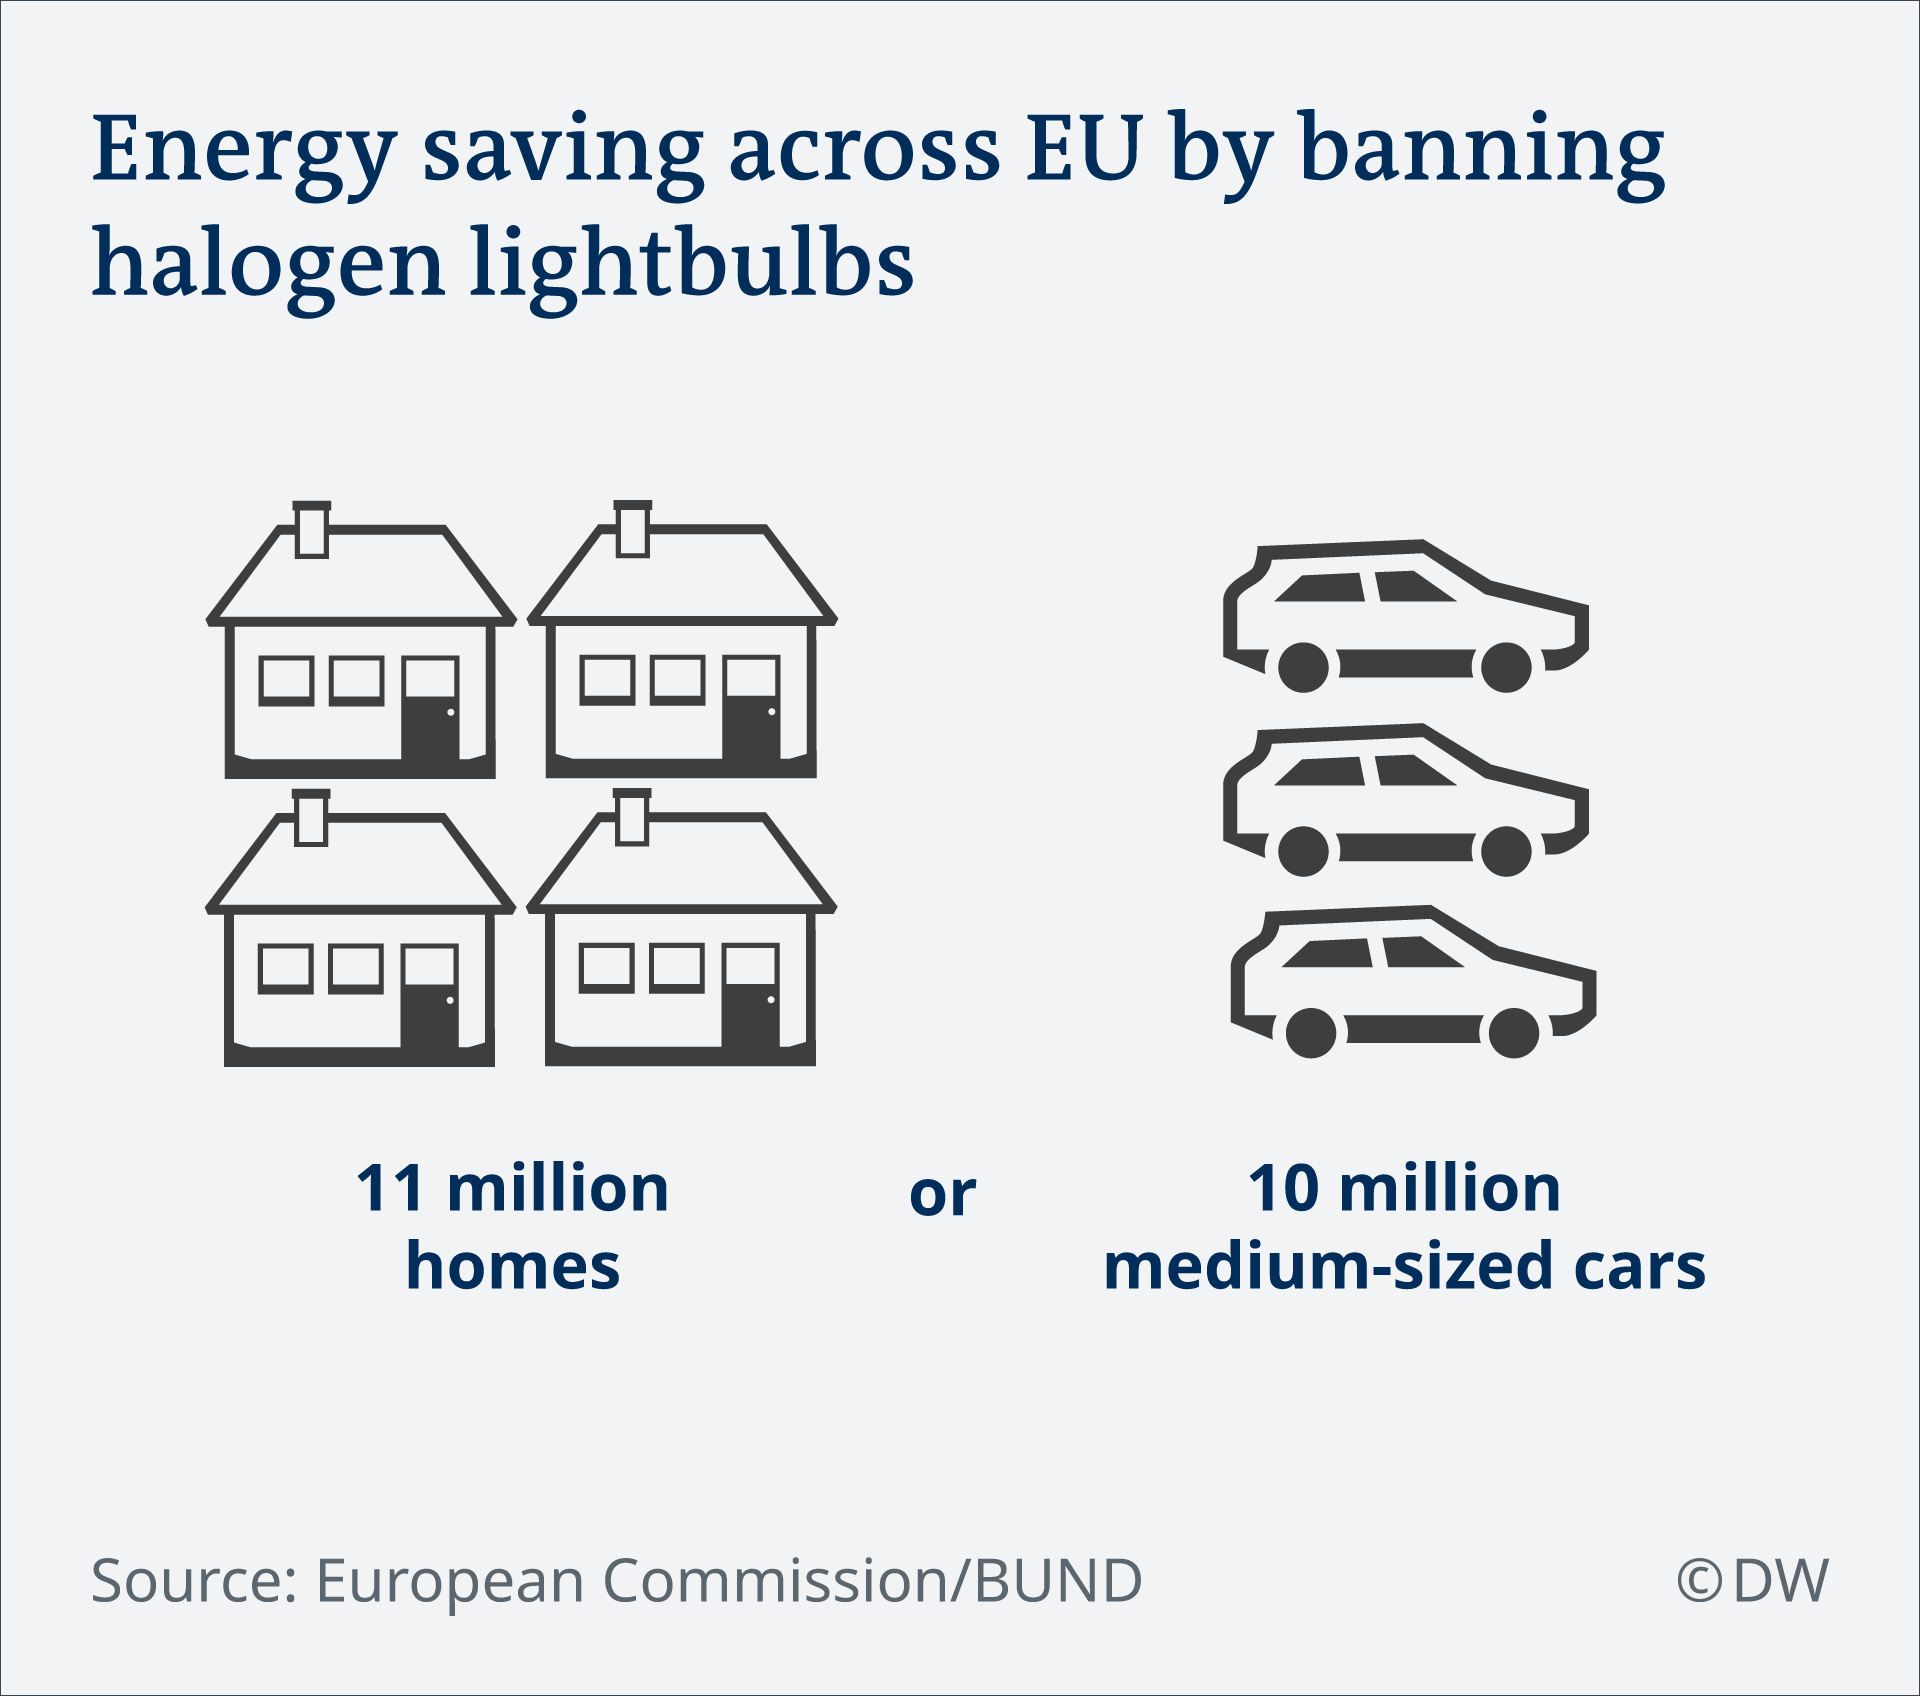 Europe to ban halogen lightbulbs, Energy